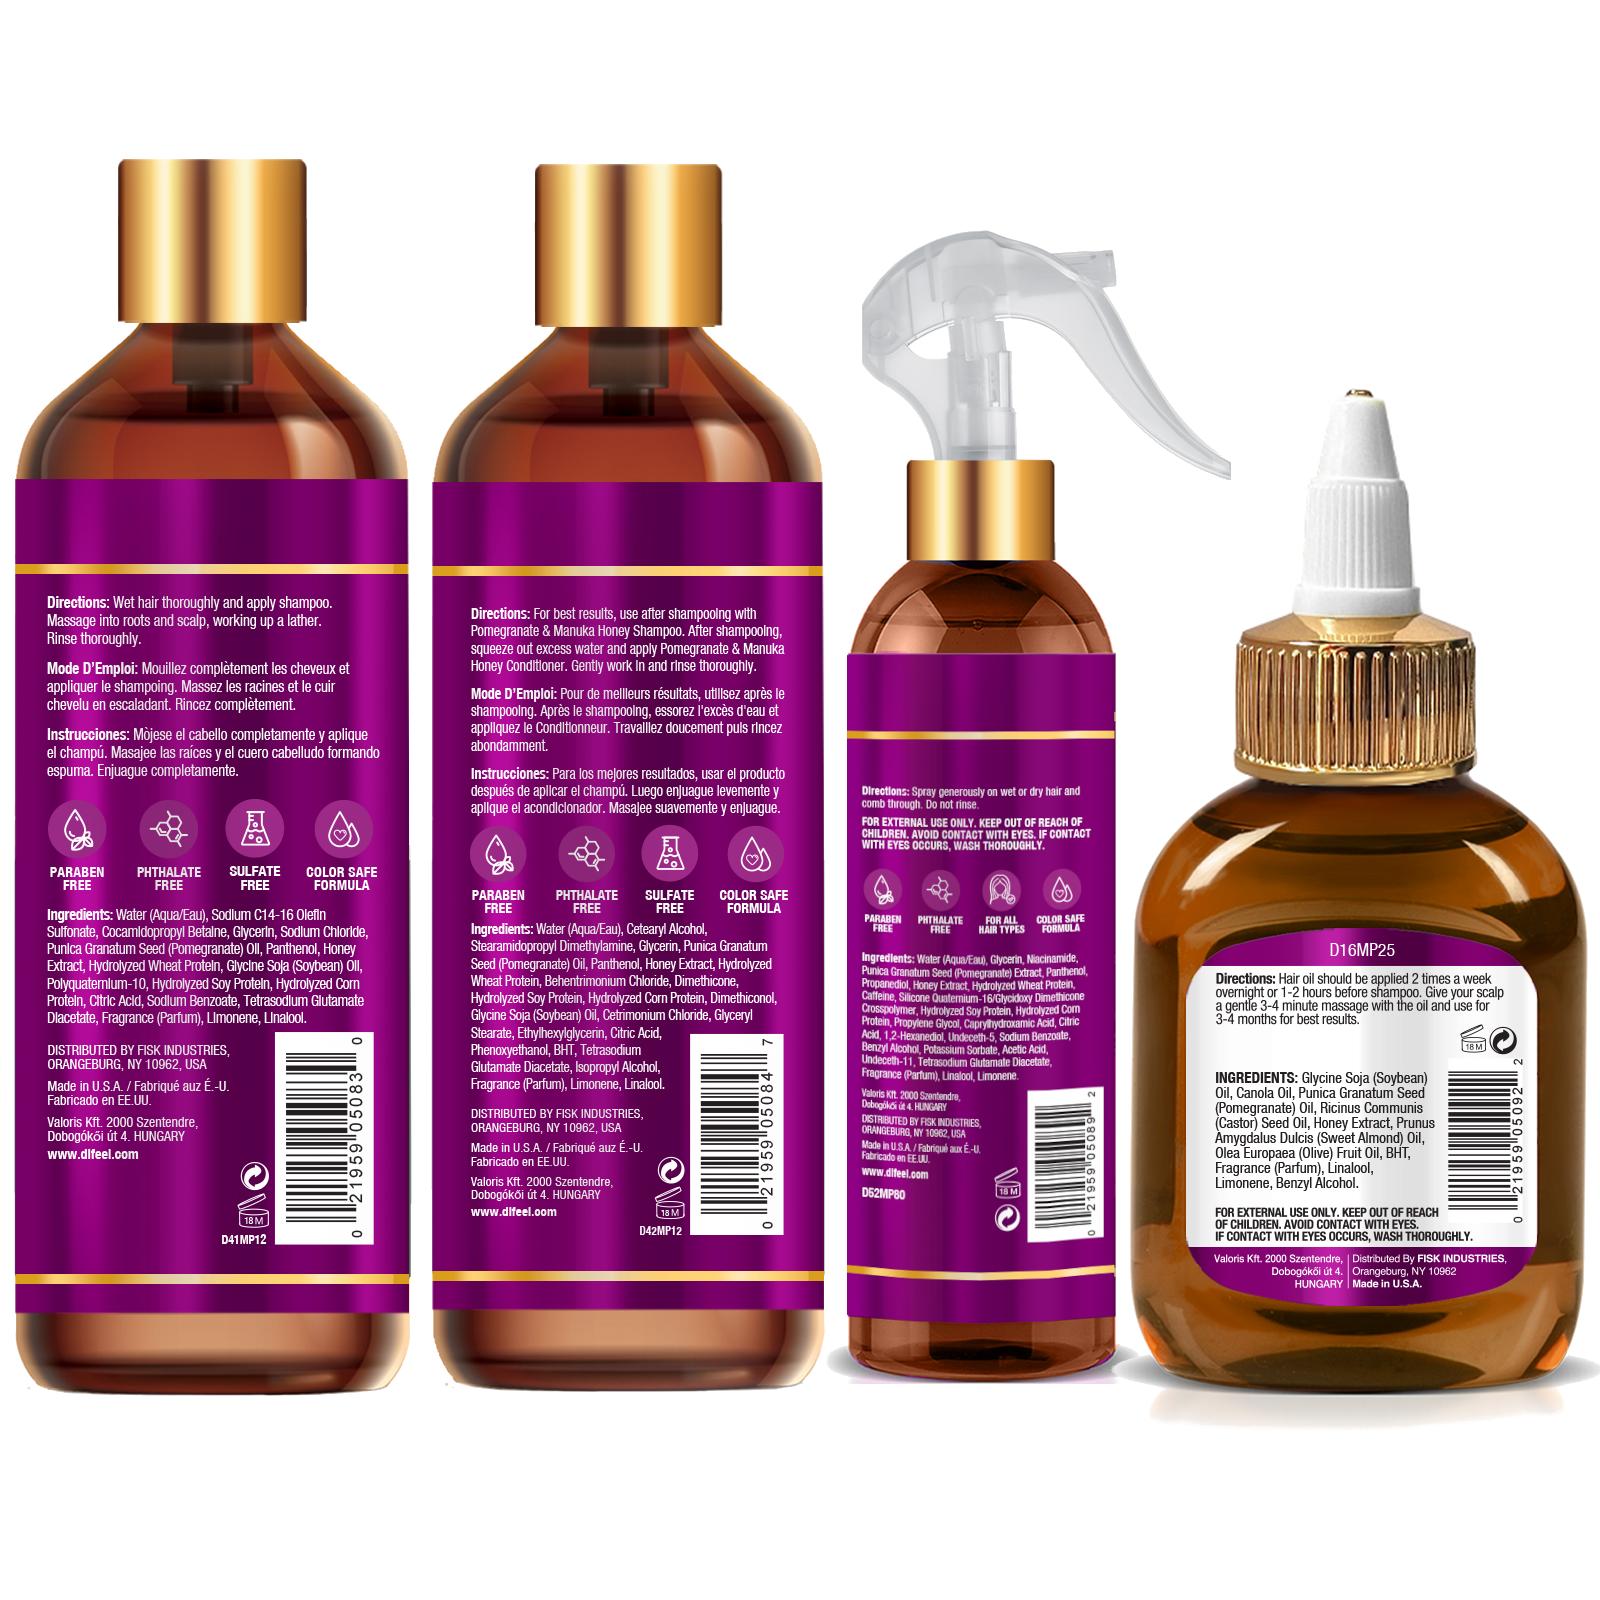 Difeel Pomegranate & Manuka Honey Shampoo & Conditioner 4-PC Set - Includes 12oz Shampoo,12oz Conditioner, 8oz Leave in Spray and 2.5oz Hair Oil